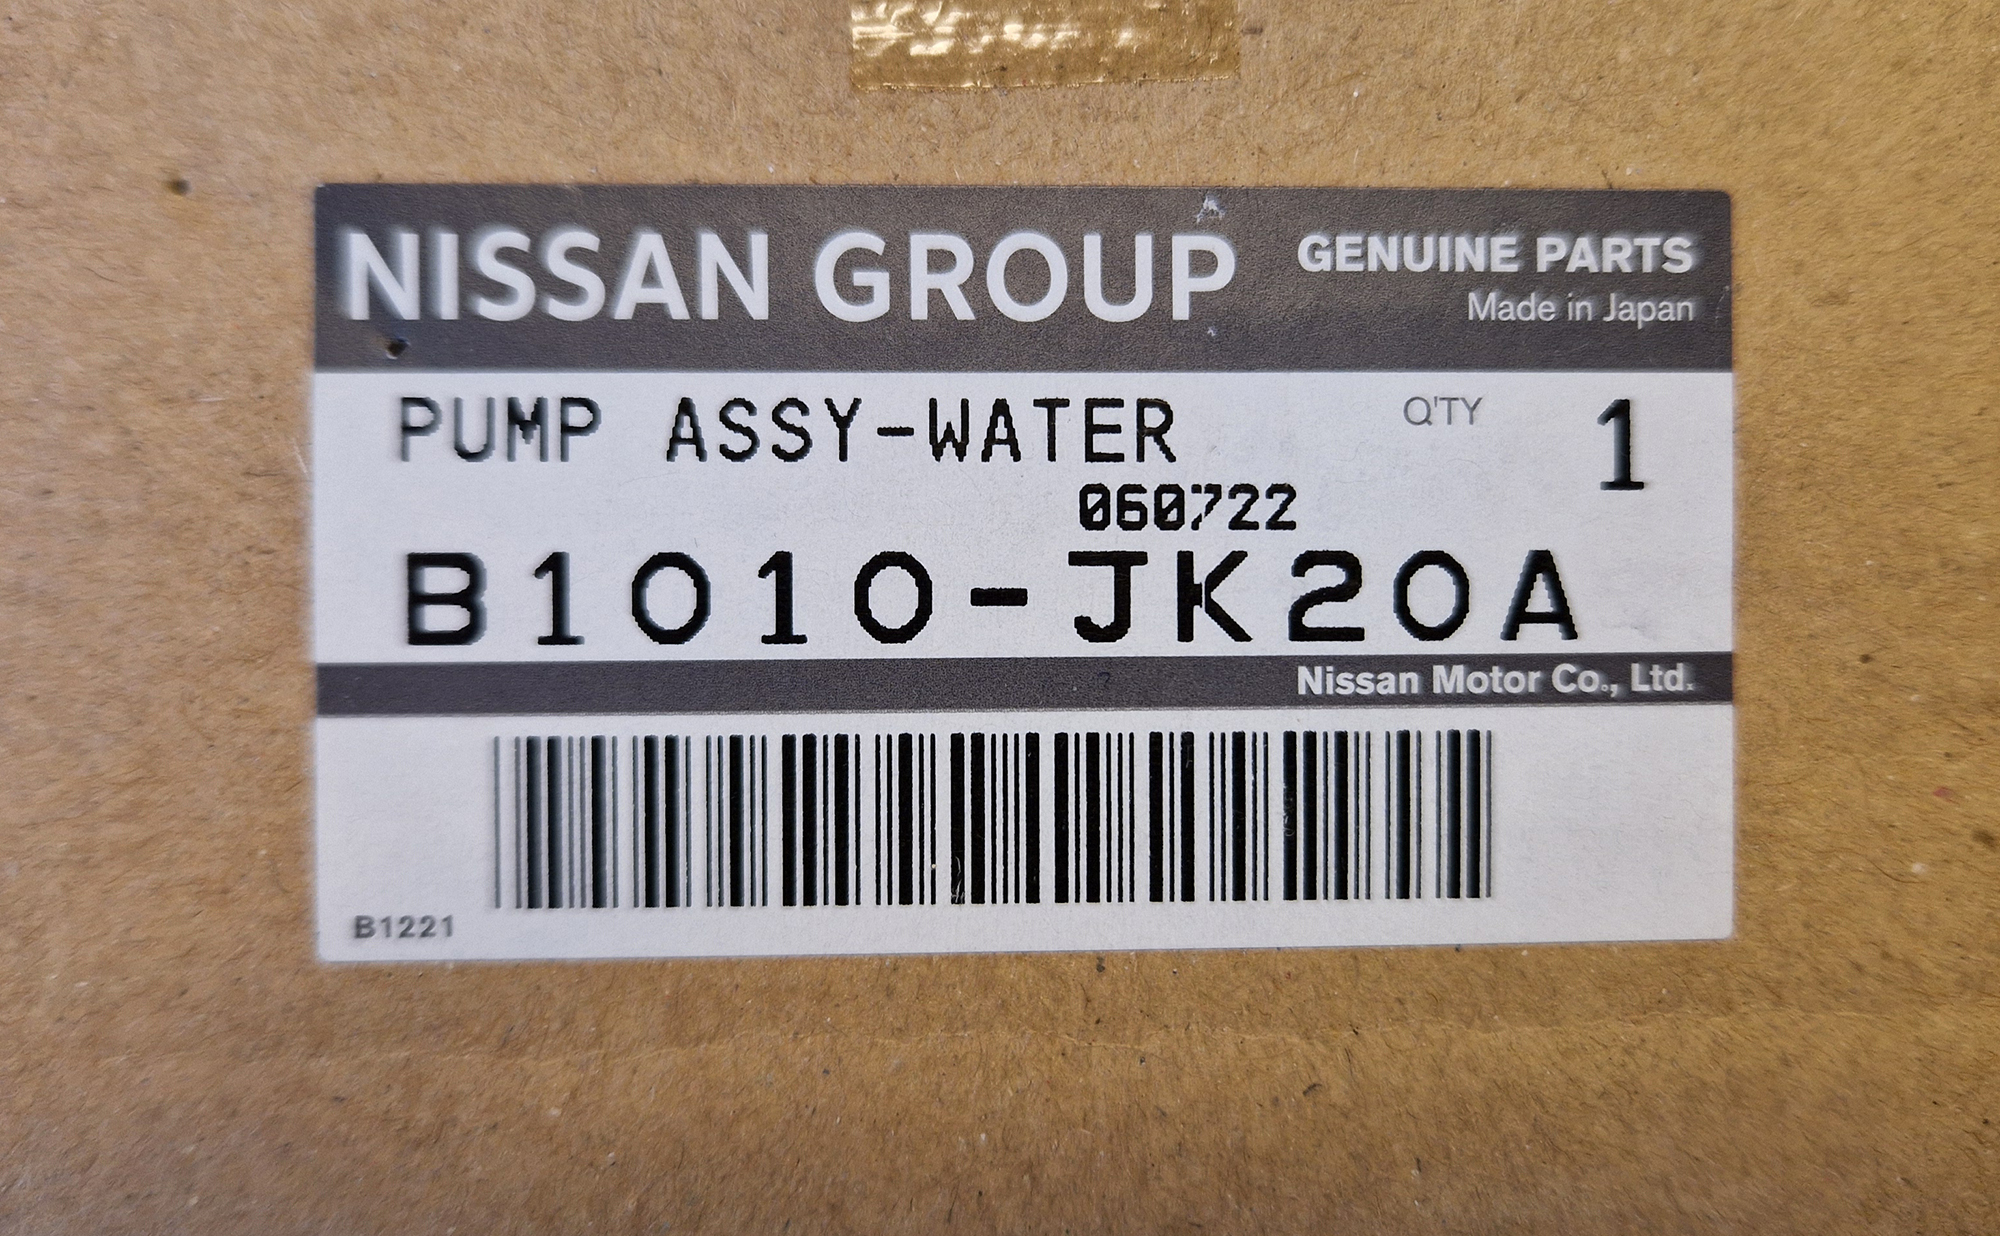 Nissan OEM waterpump voor VR38DETT motoren - B1010-JK20A - Klik om te sluiten